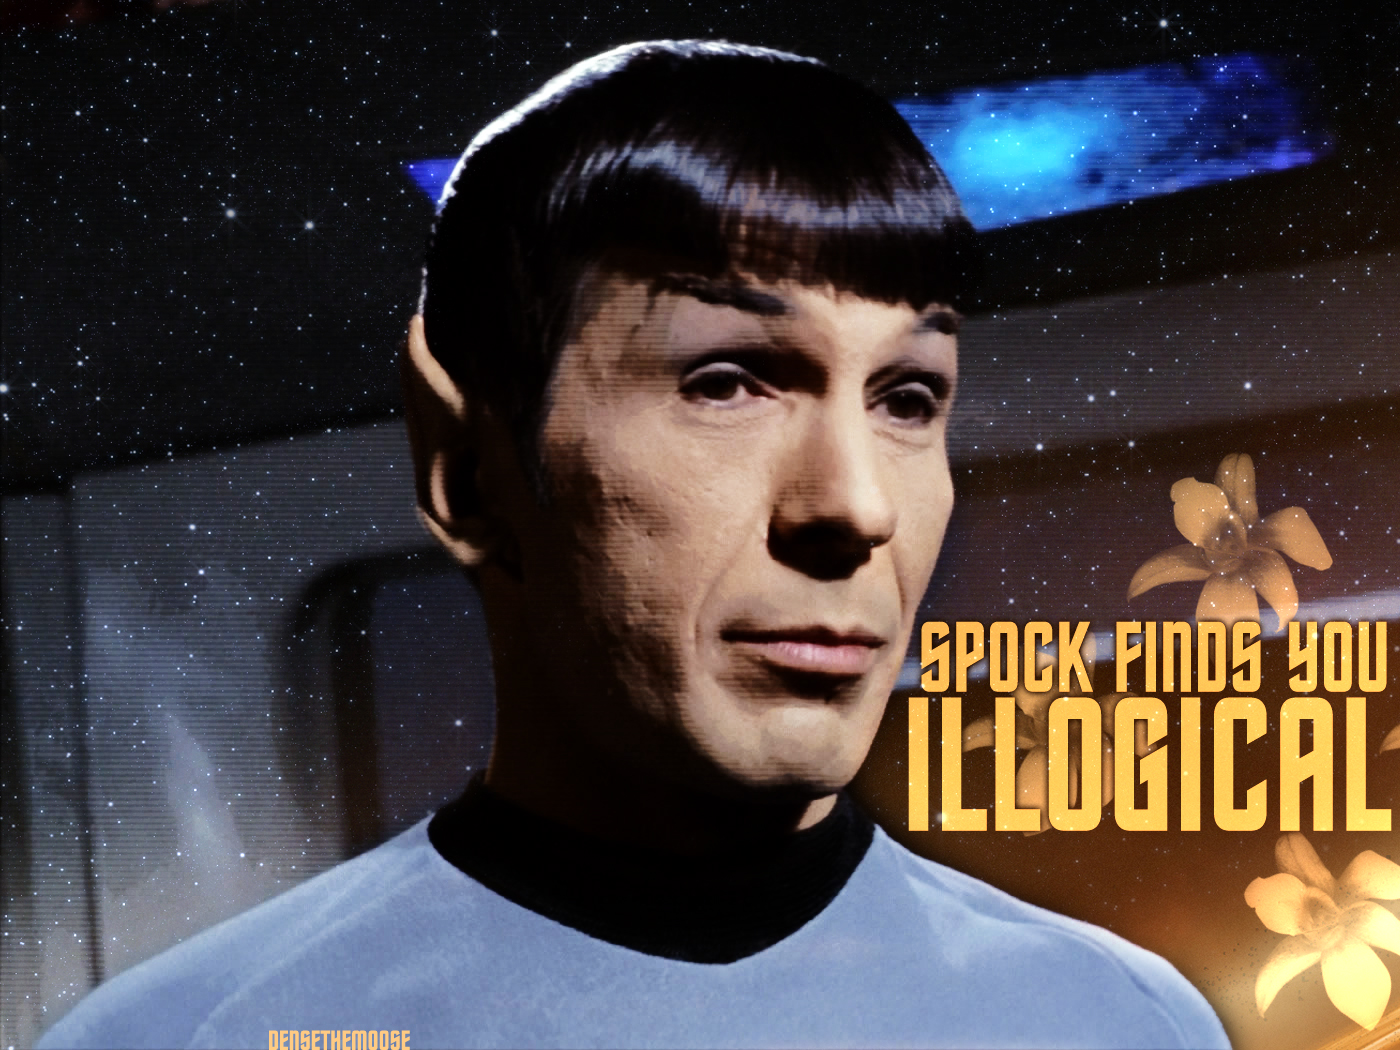 http://fc00.deviantart.net/fs46/f/2009/191/1/1/Spock_Finds_You_Illogical_by_densethemoose.jpg